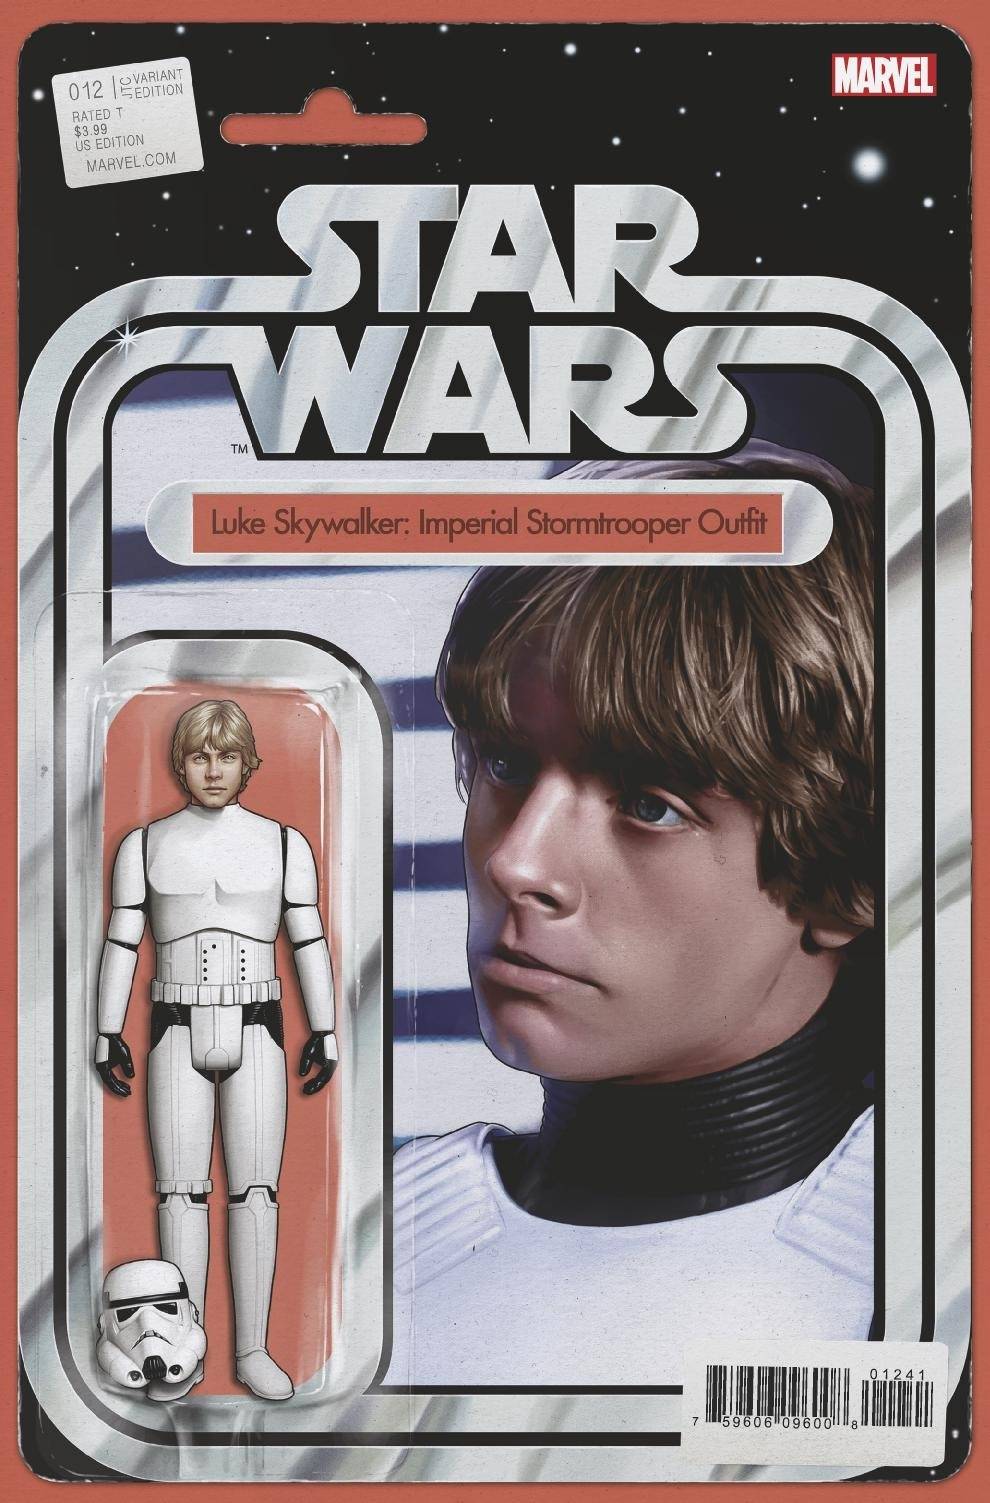 Star Wars #12 ("Luke Skywalker: Imperial Stormtrooper Outfit" Action Figure Variant Cover) (10.03.2021)